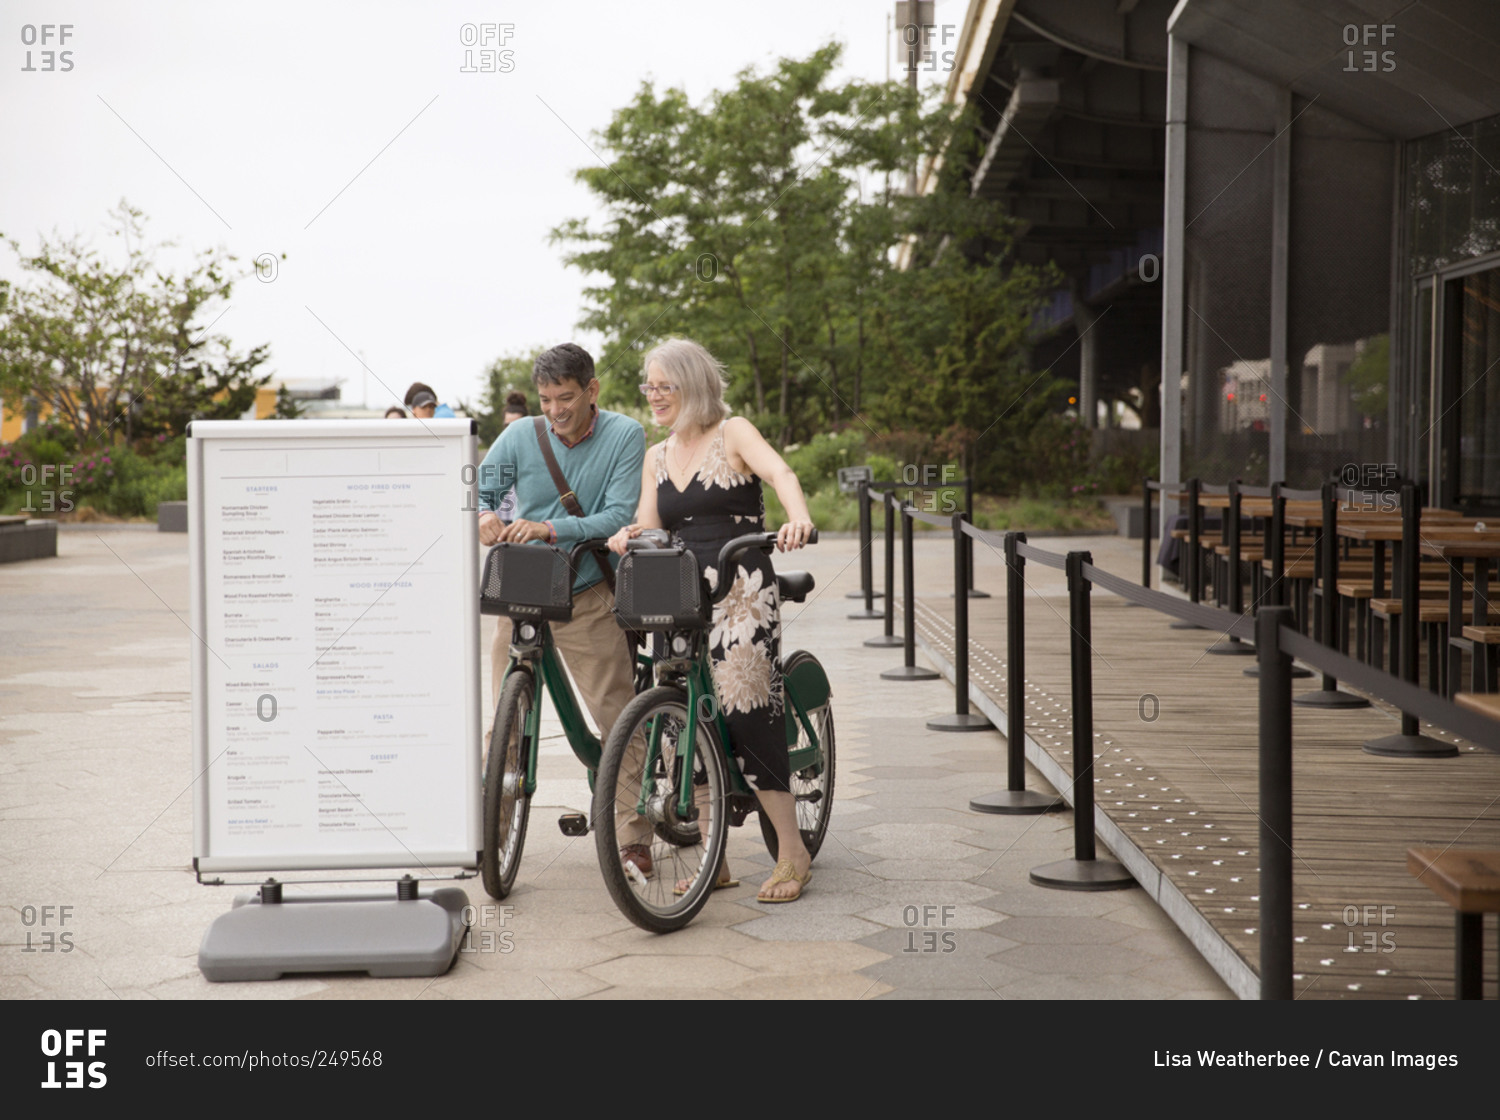 A couple riding shared bikes checks out a restaurant menu